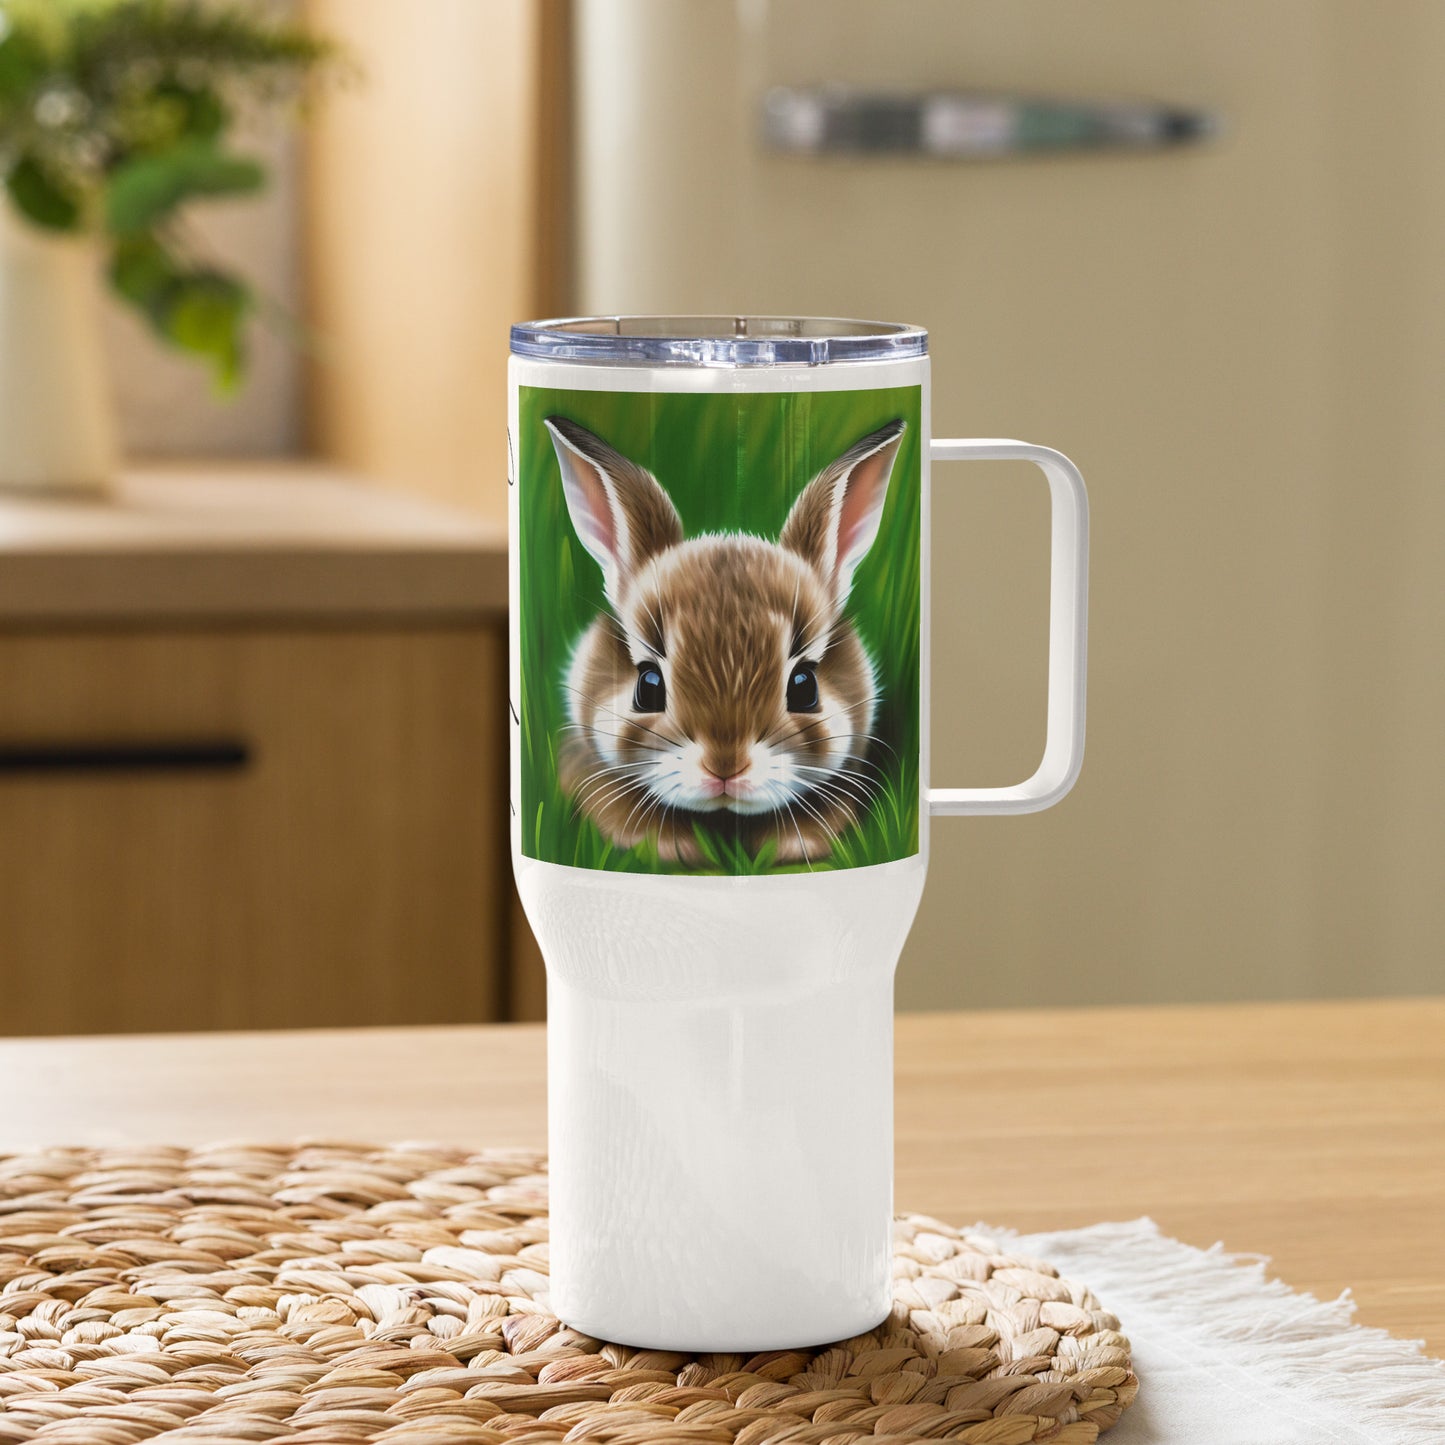 Bunny Travel Mug: Inspired by BTS's Jung Kook